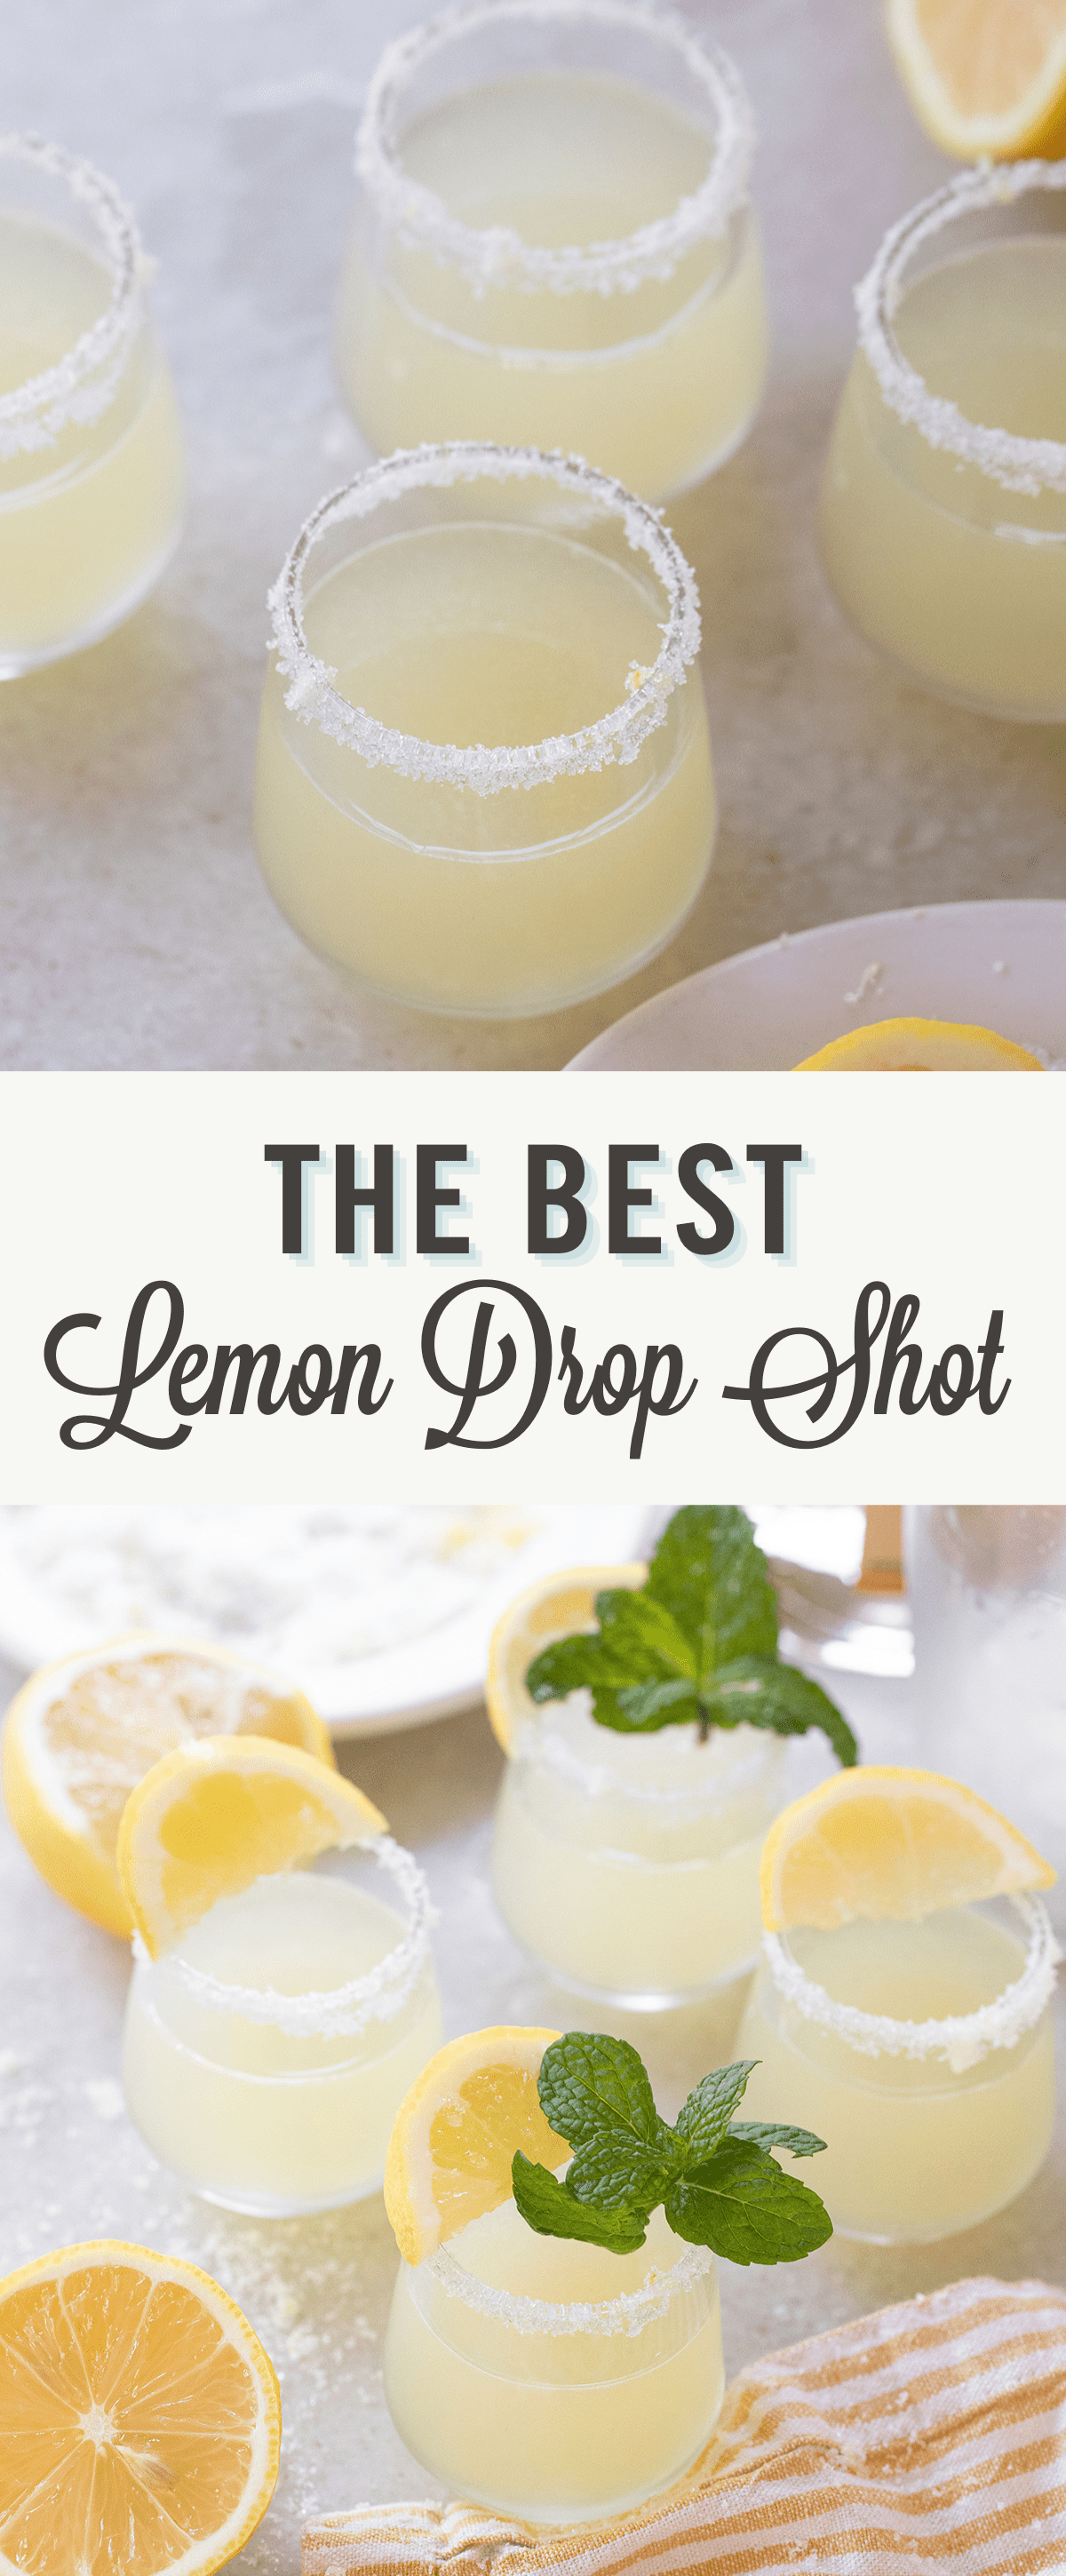 The best lemon drop recipe with title.